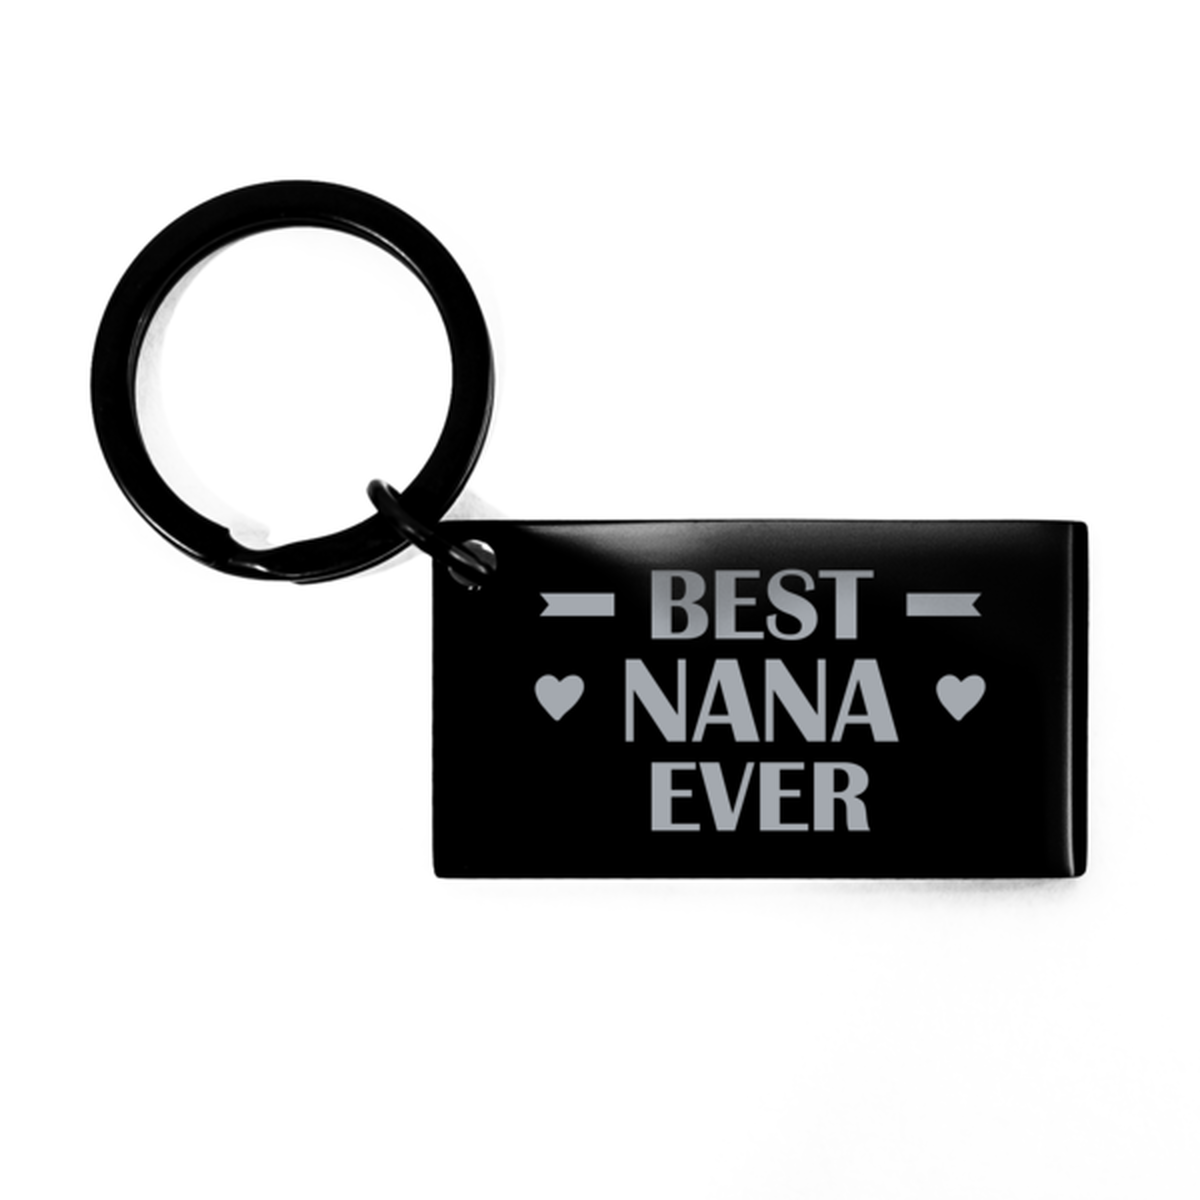 Best Nana Ever Nana Gifts, Funny Black Keychain For Nana, Birthday Engraved Keyring Presents For Women